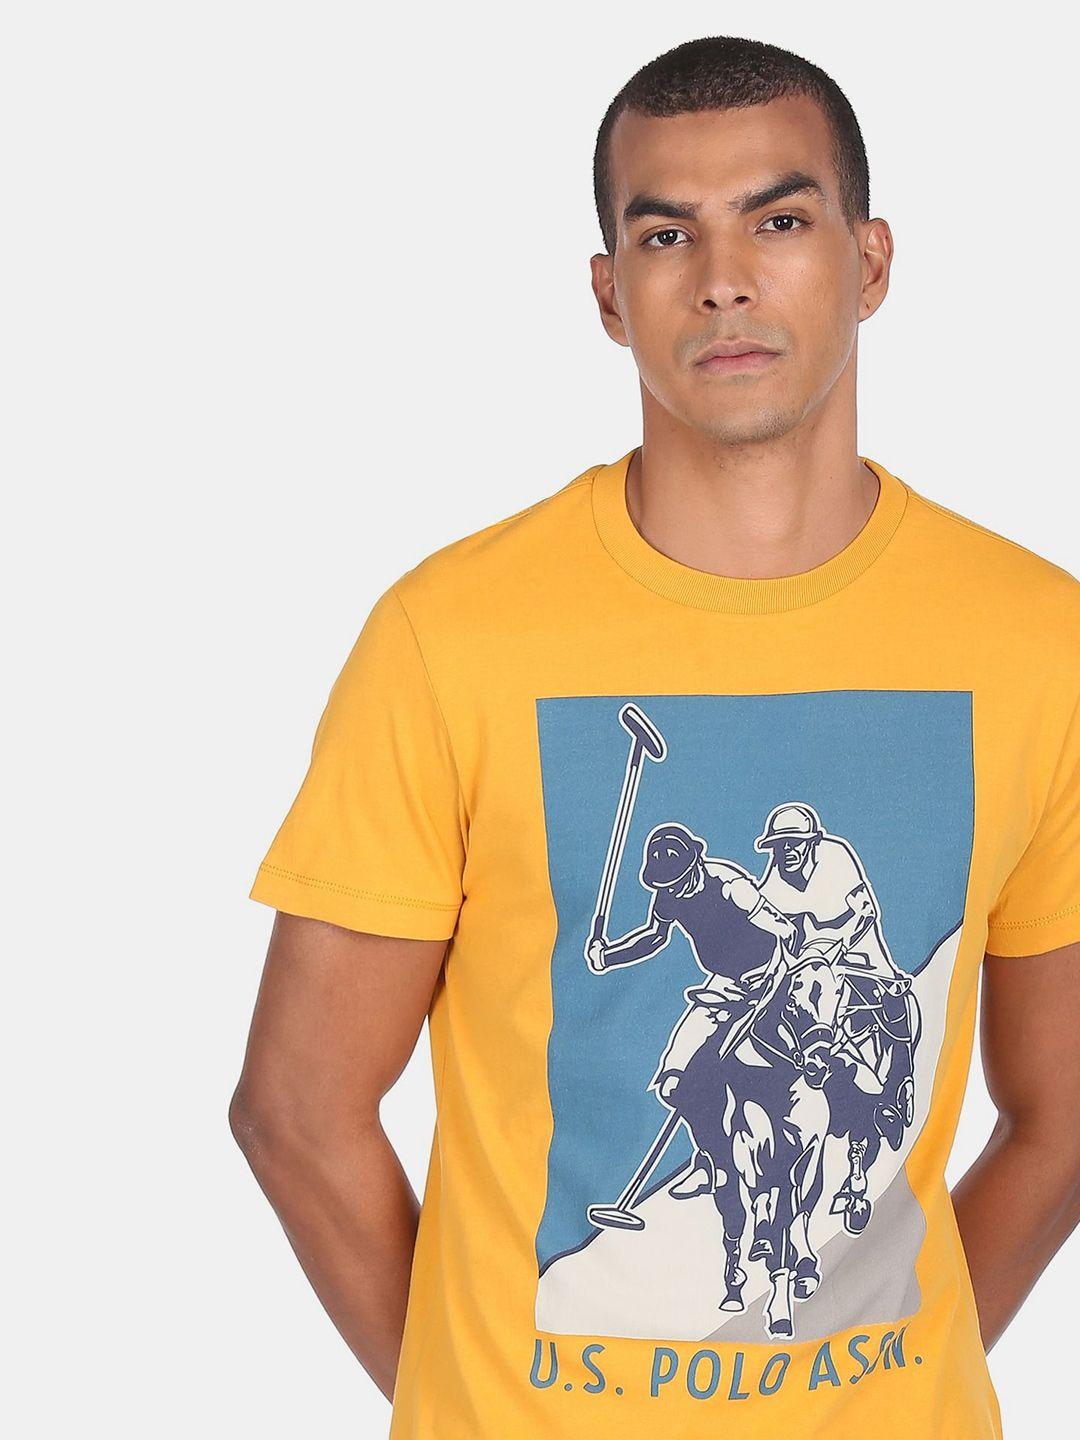 u.s. polo assn. denim co.men mustard yellow printed t-shirt